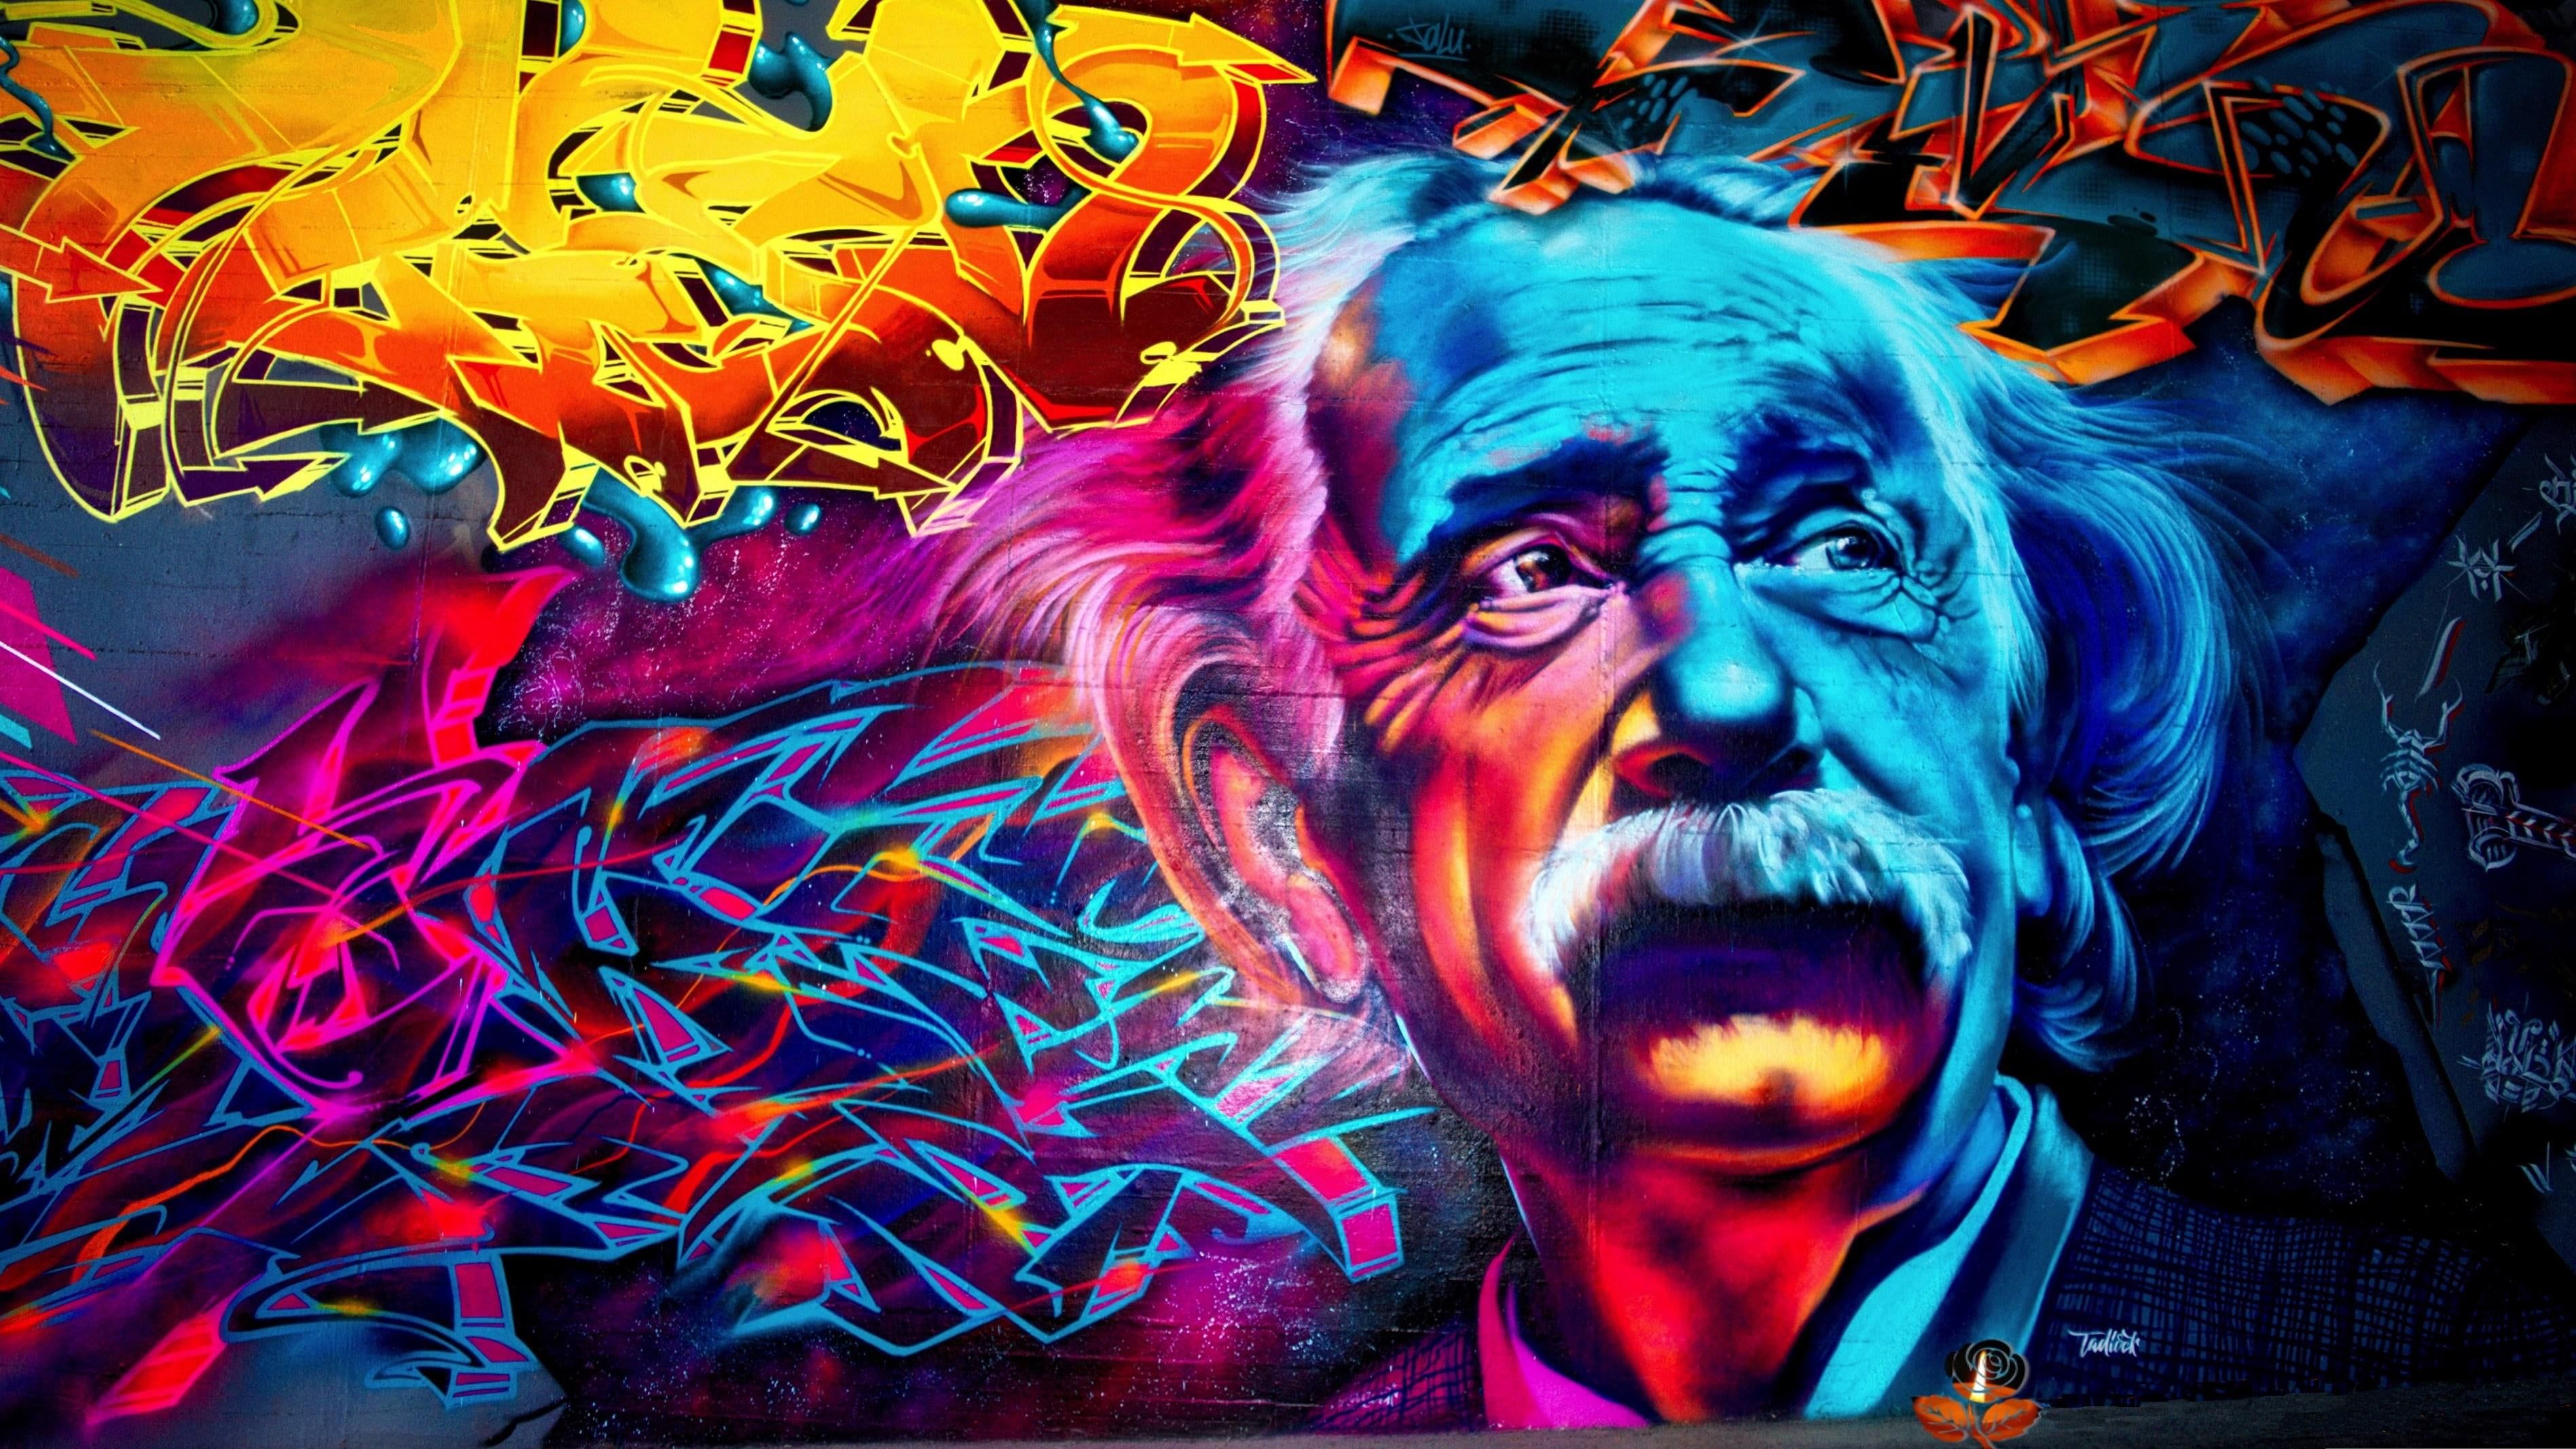 Einstein on a wall - Graffiti, street art